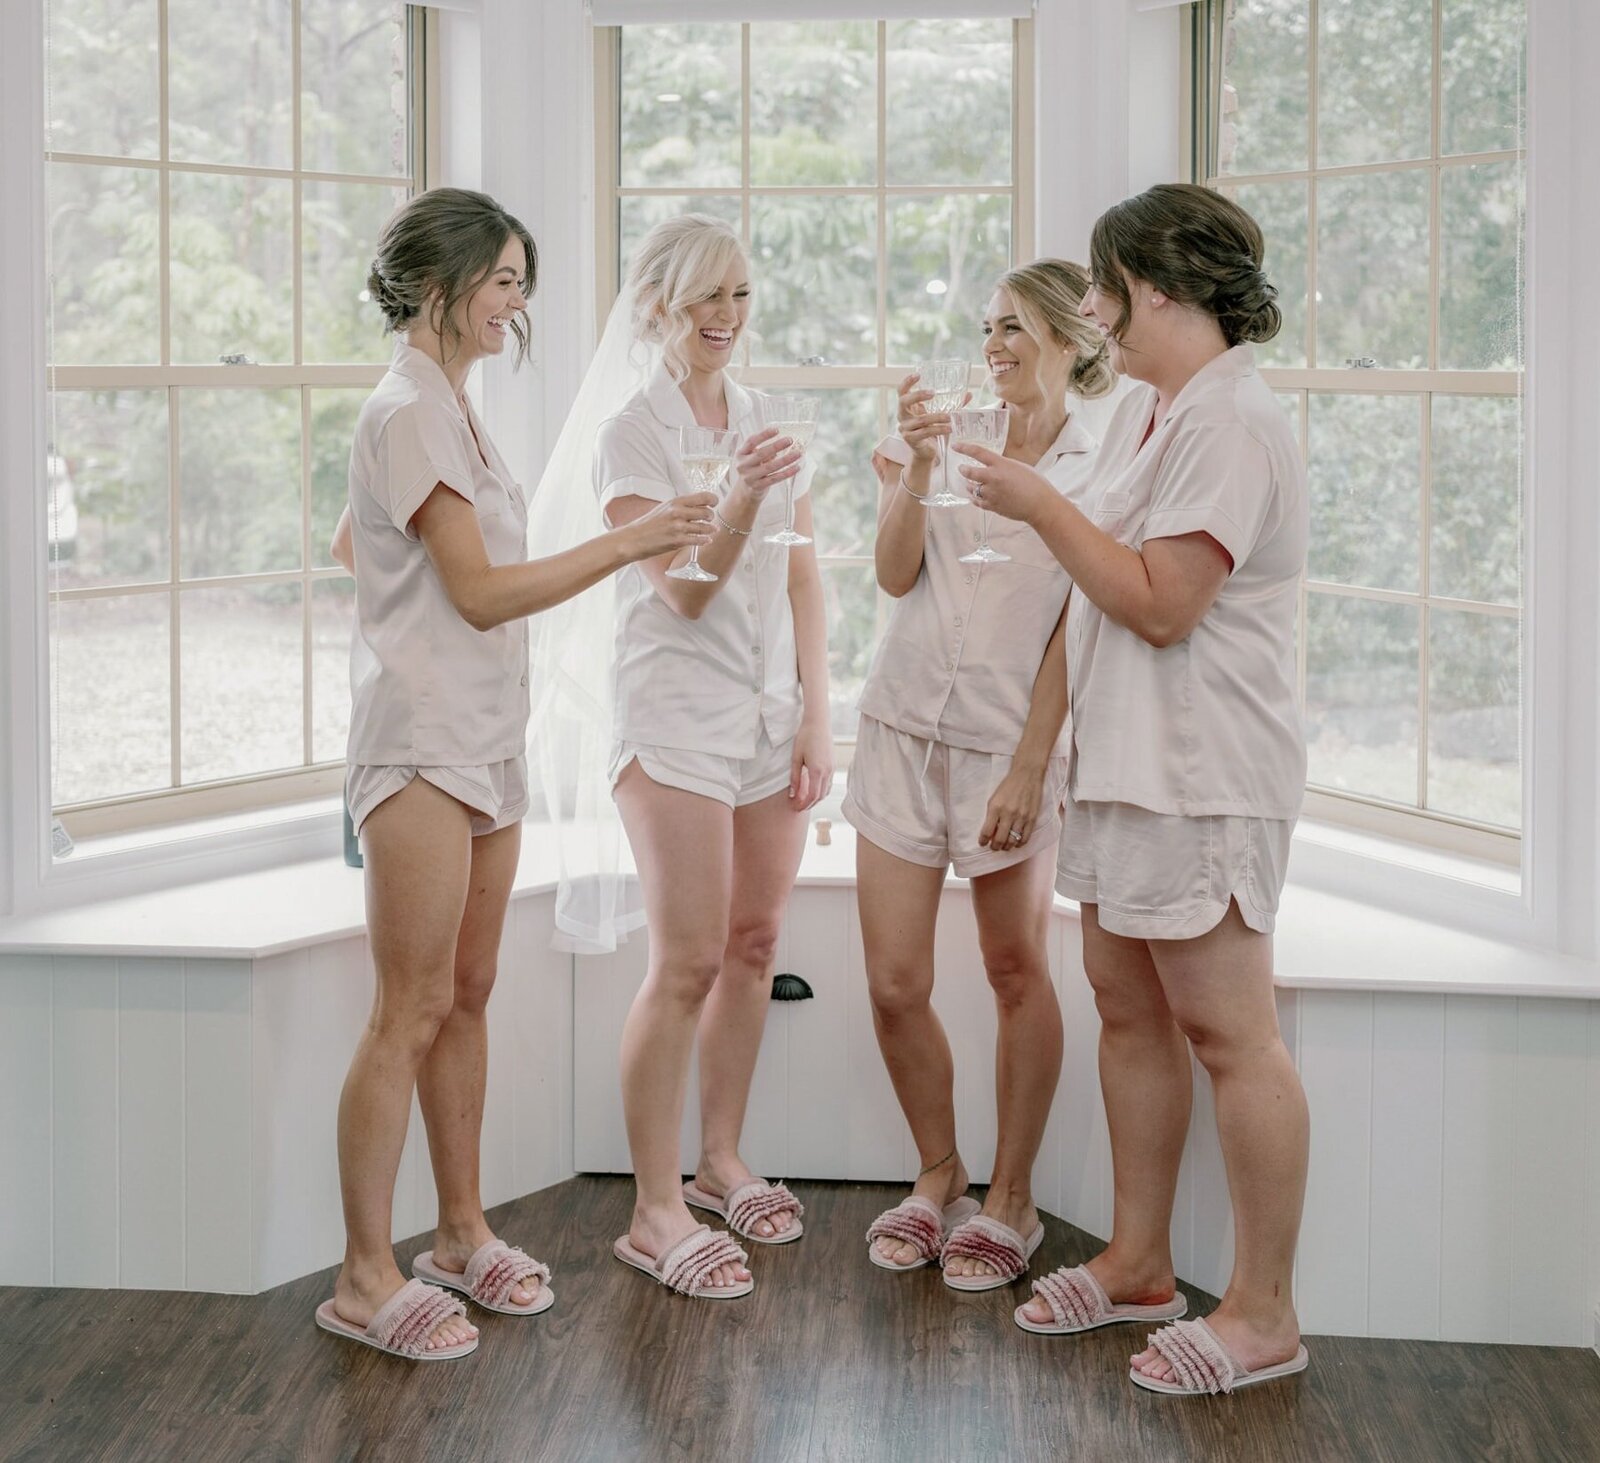 Bride and bridesmaids in matching pajamas